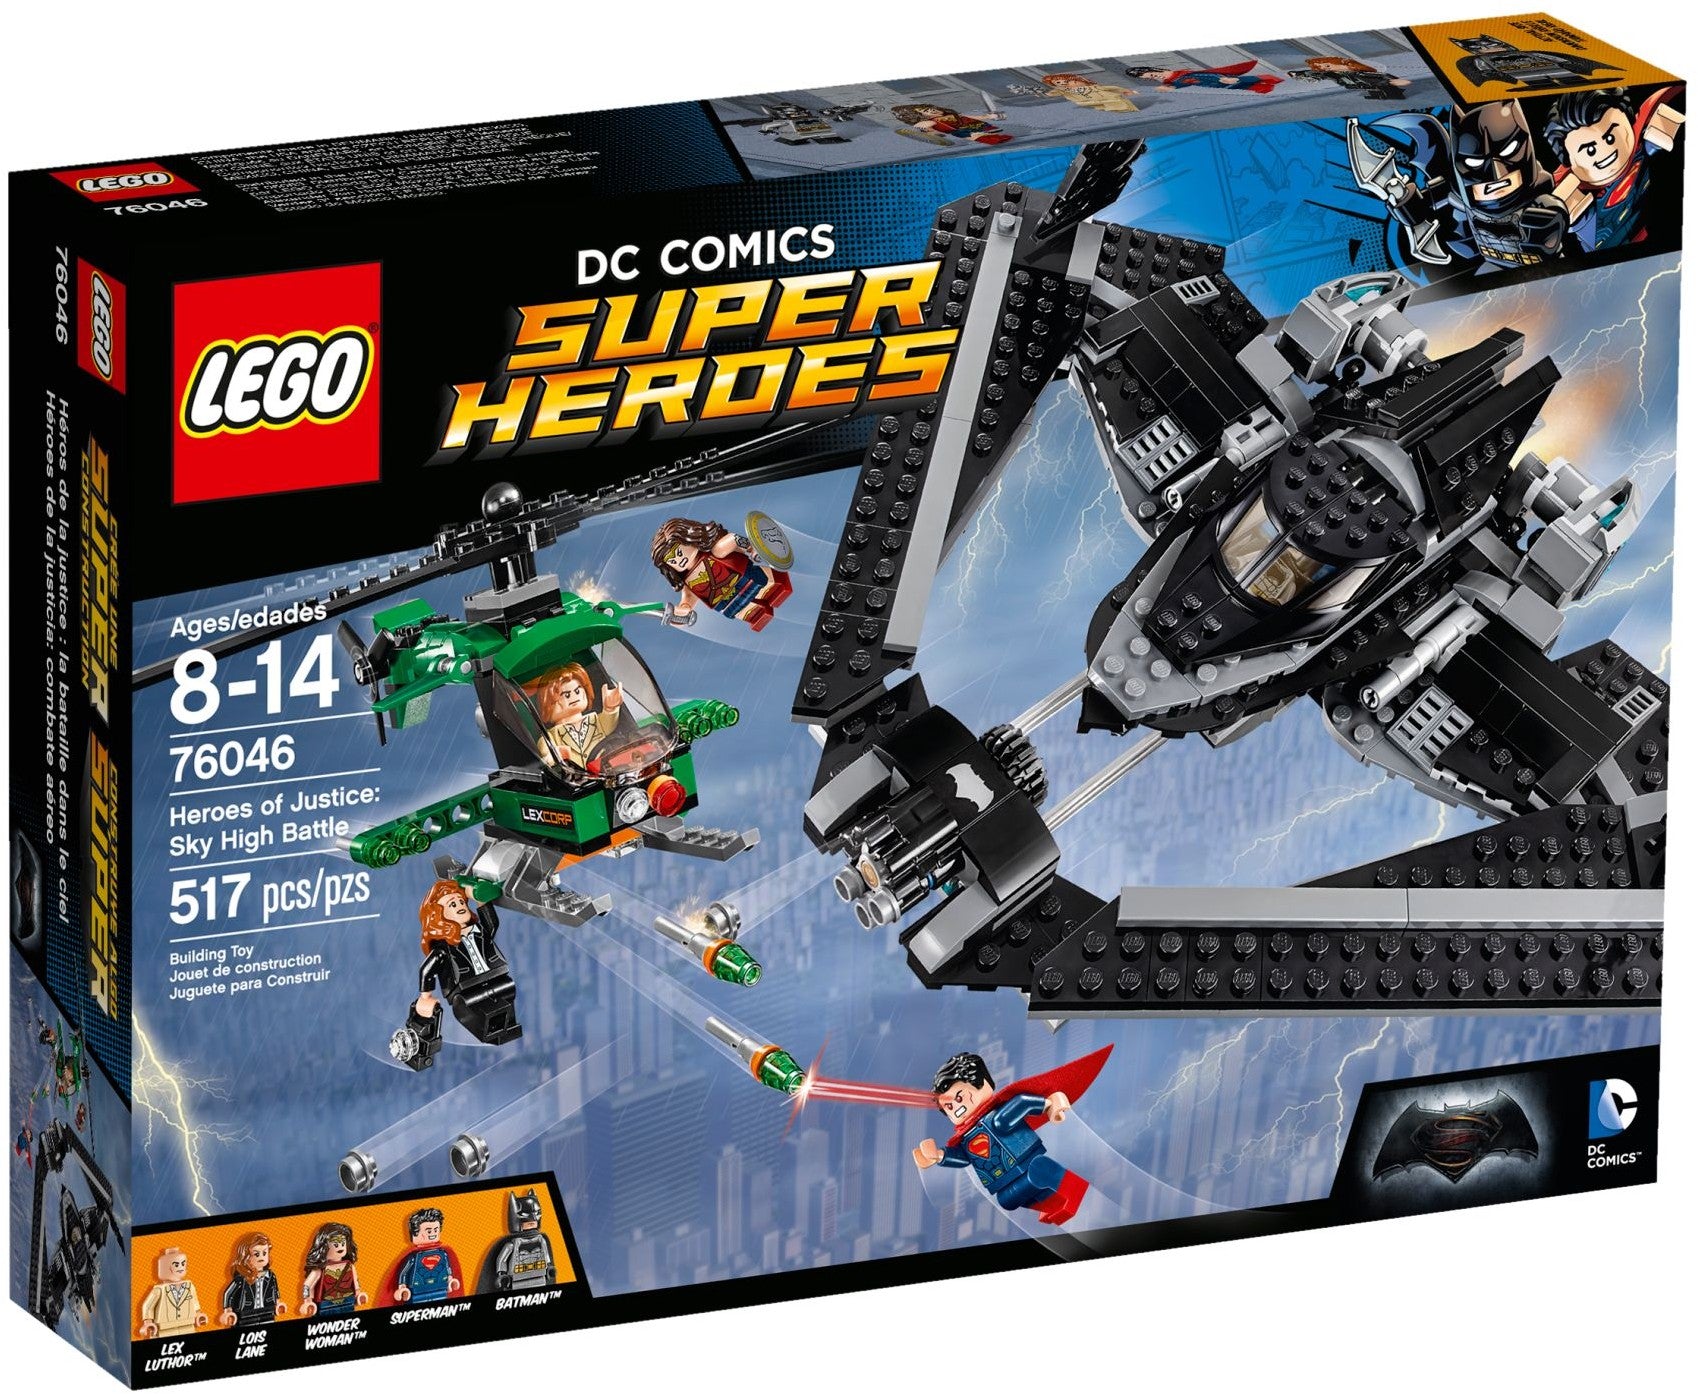 Lego Super Heroes 76046 - Heroes of Justice:Sky High Battle